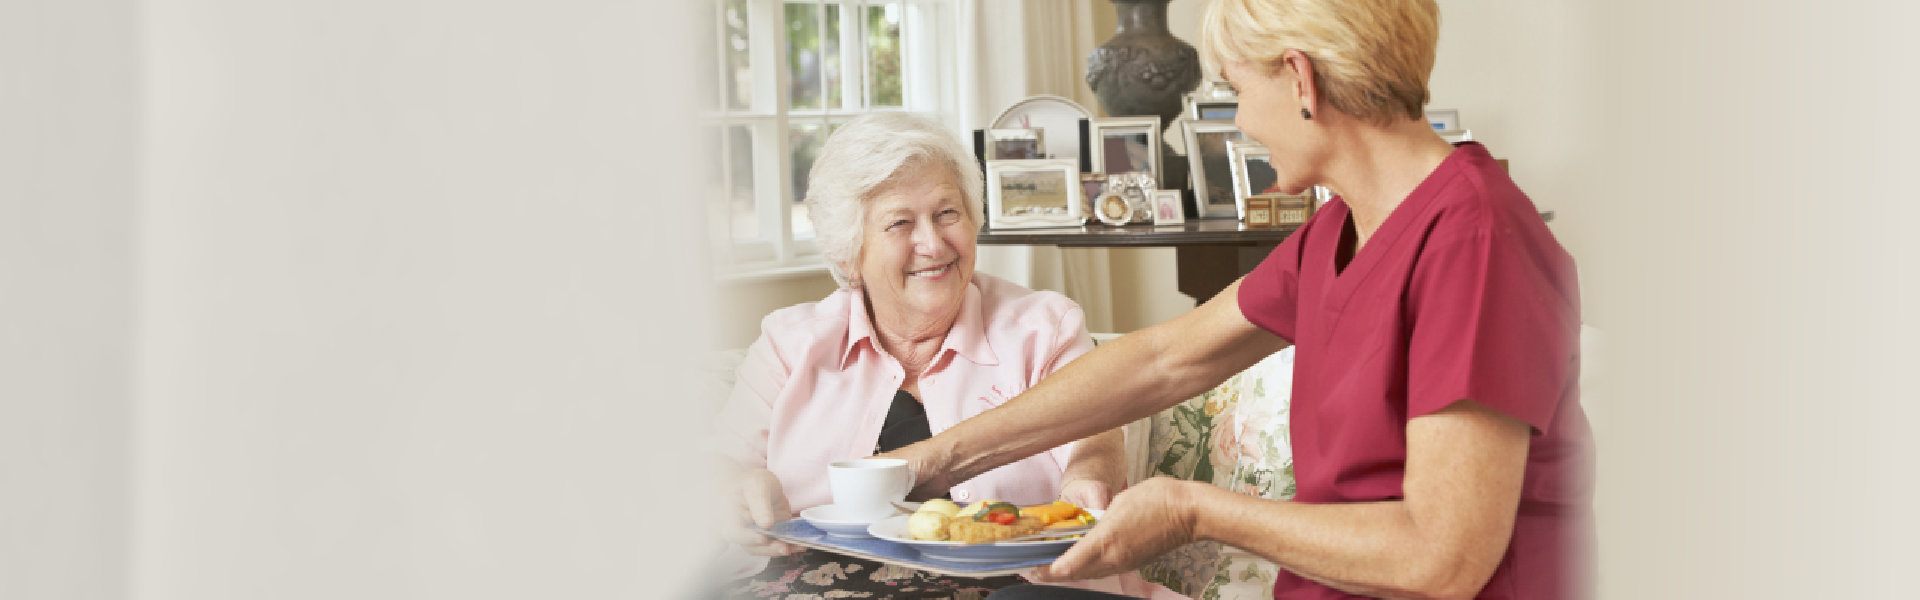 caregiver serving food to senior woman